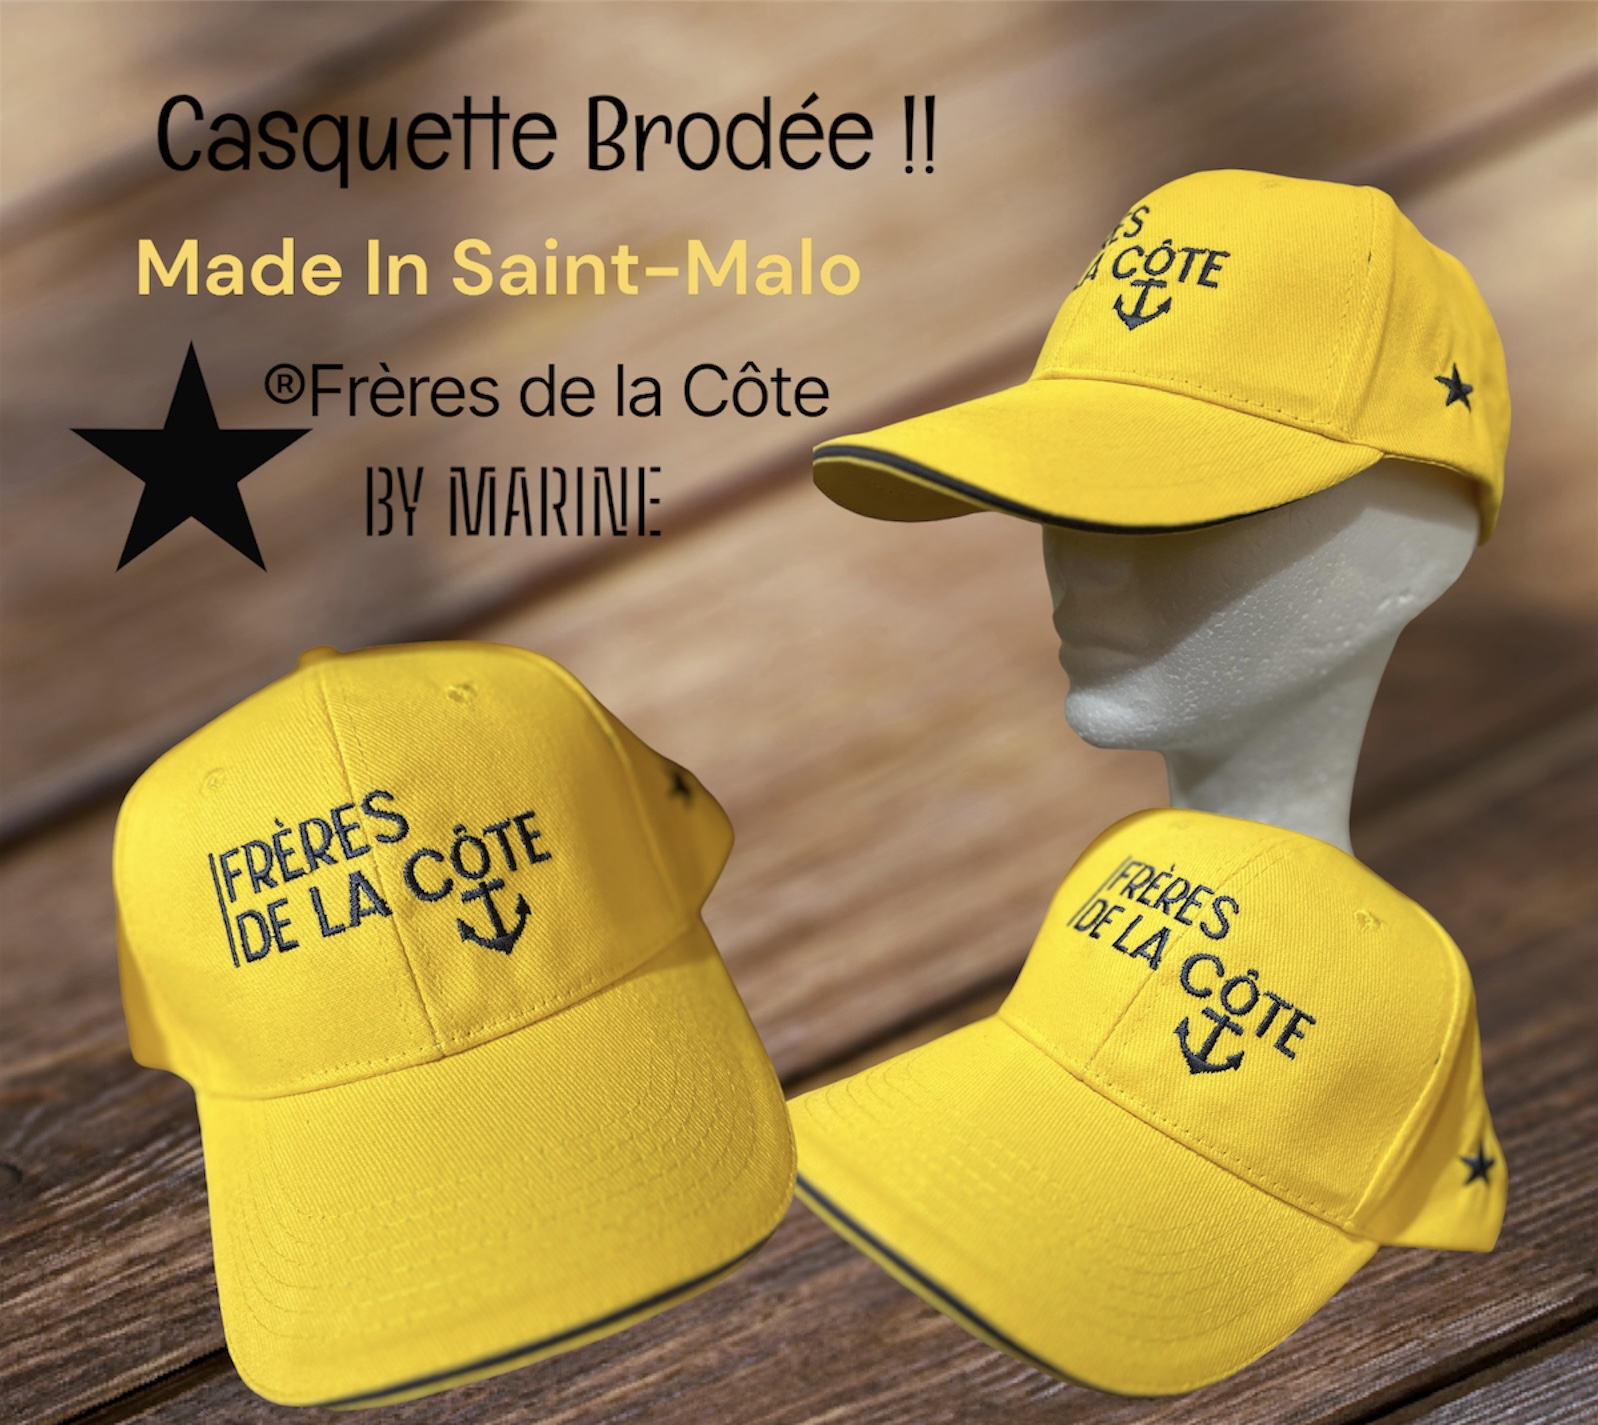 Casquette brodée VITAMINE marine made in France 100% coton biologique